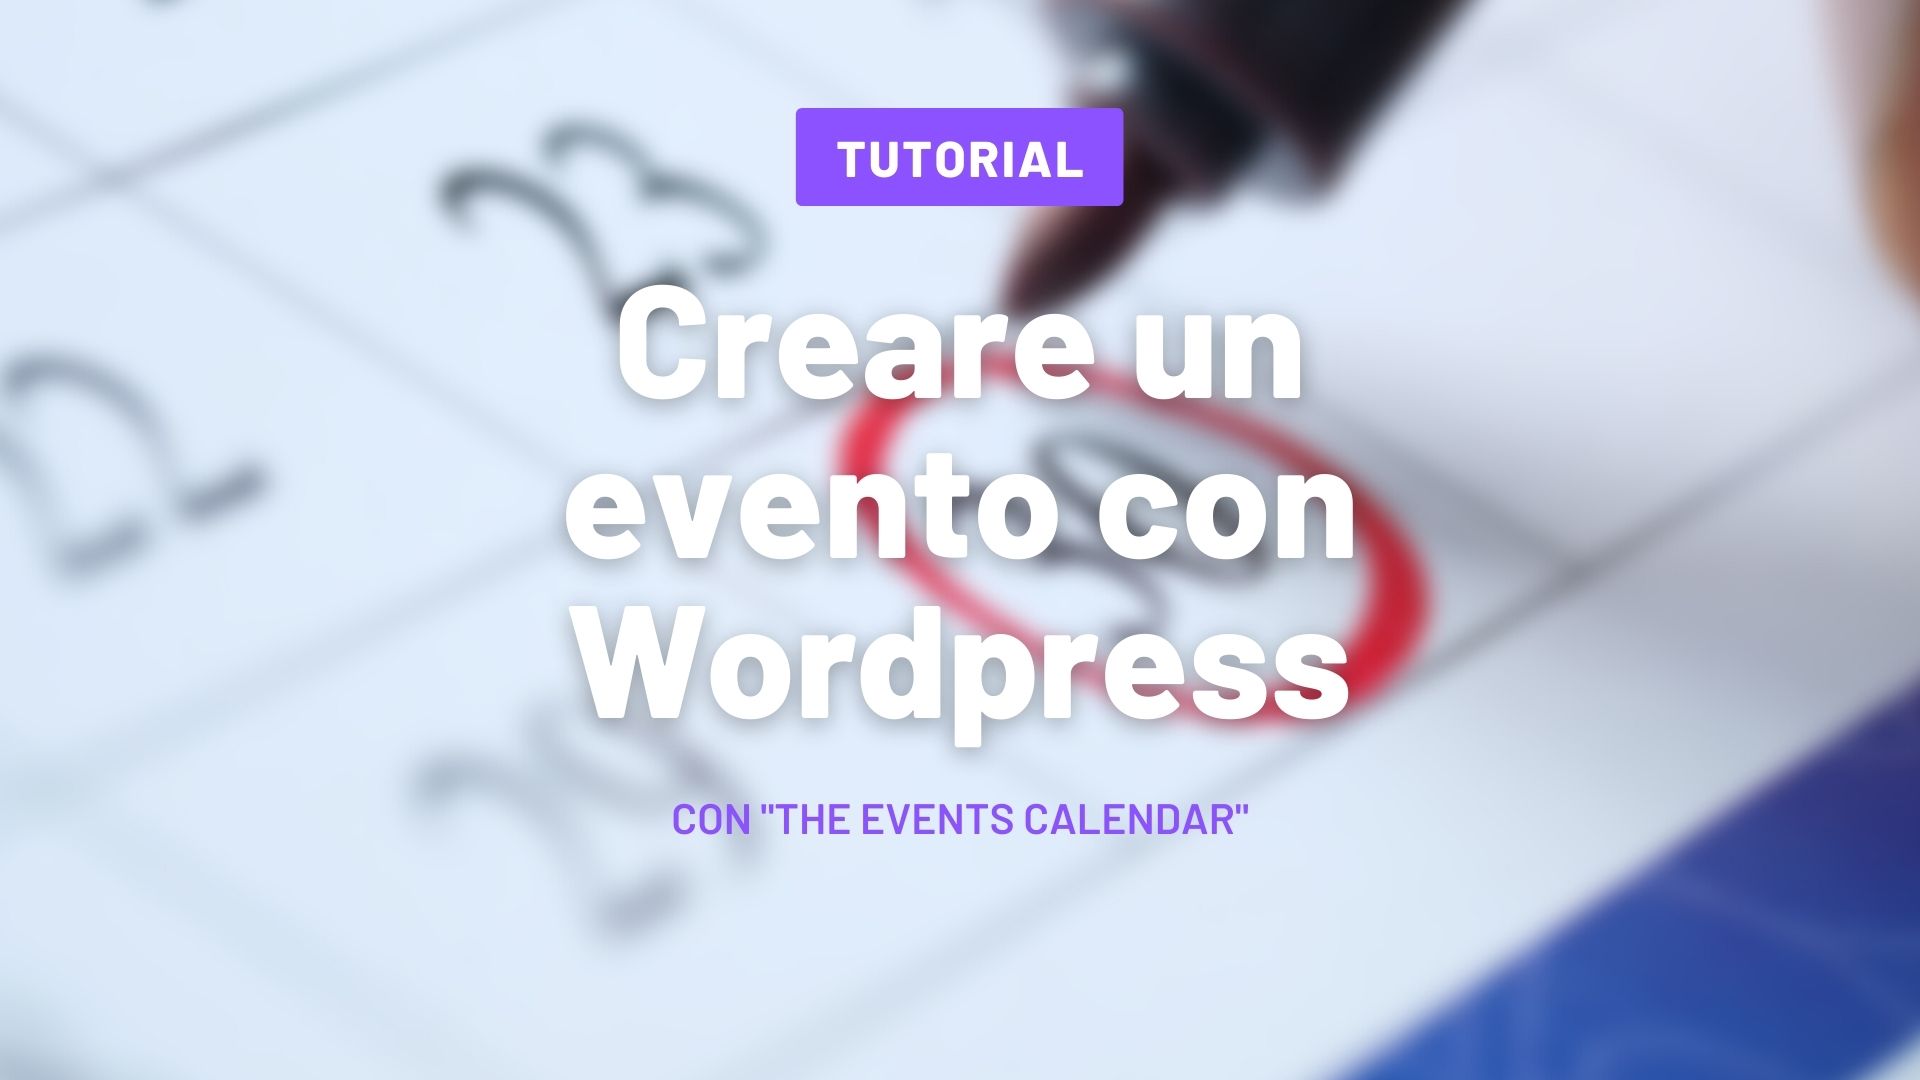 Creare un evento con WordPress tutorial